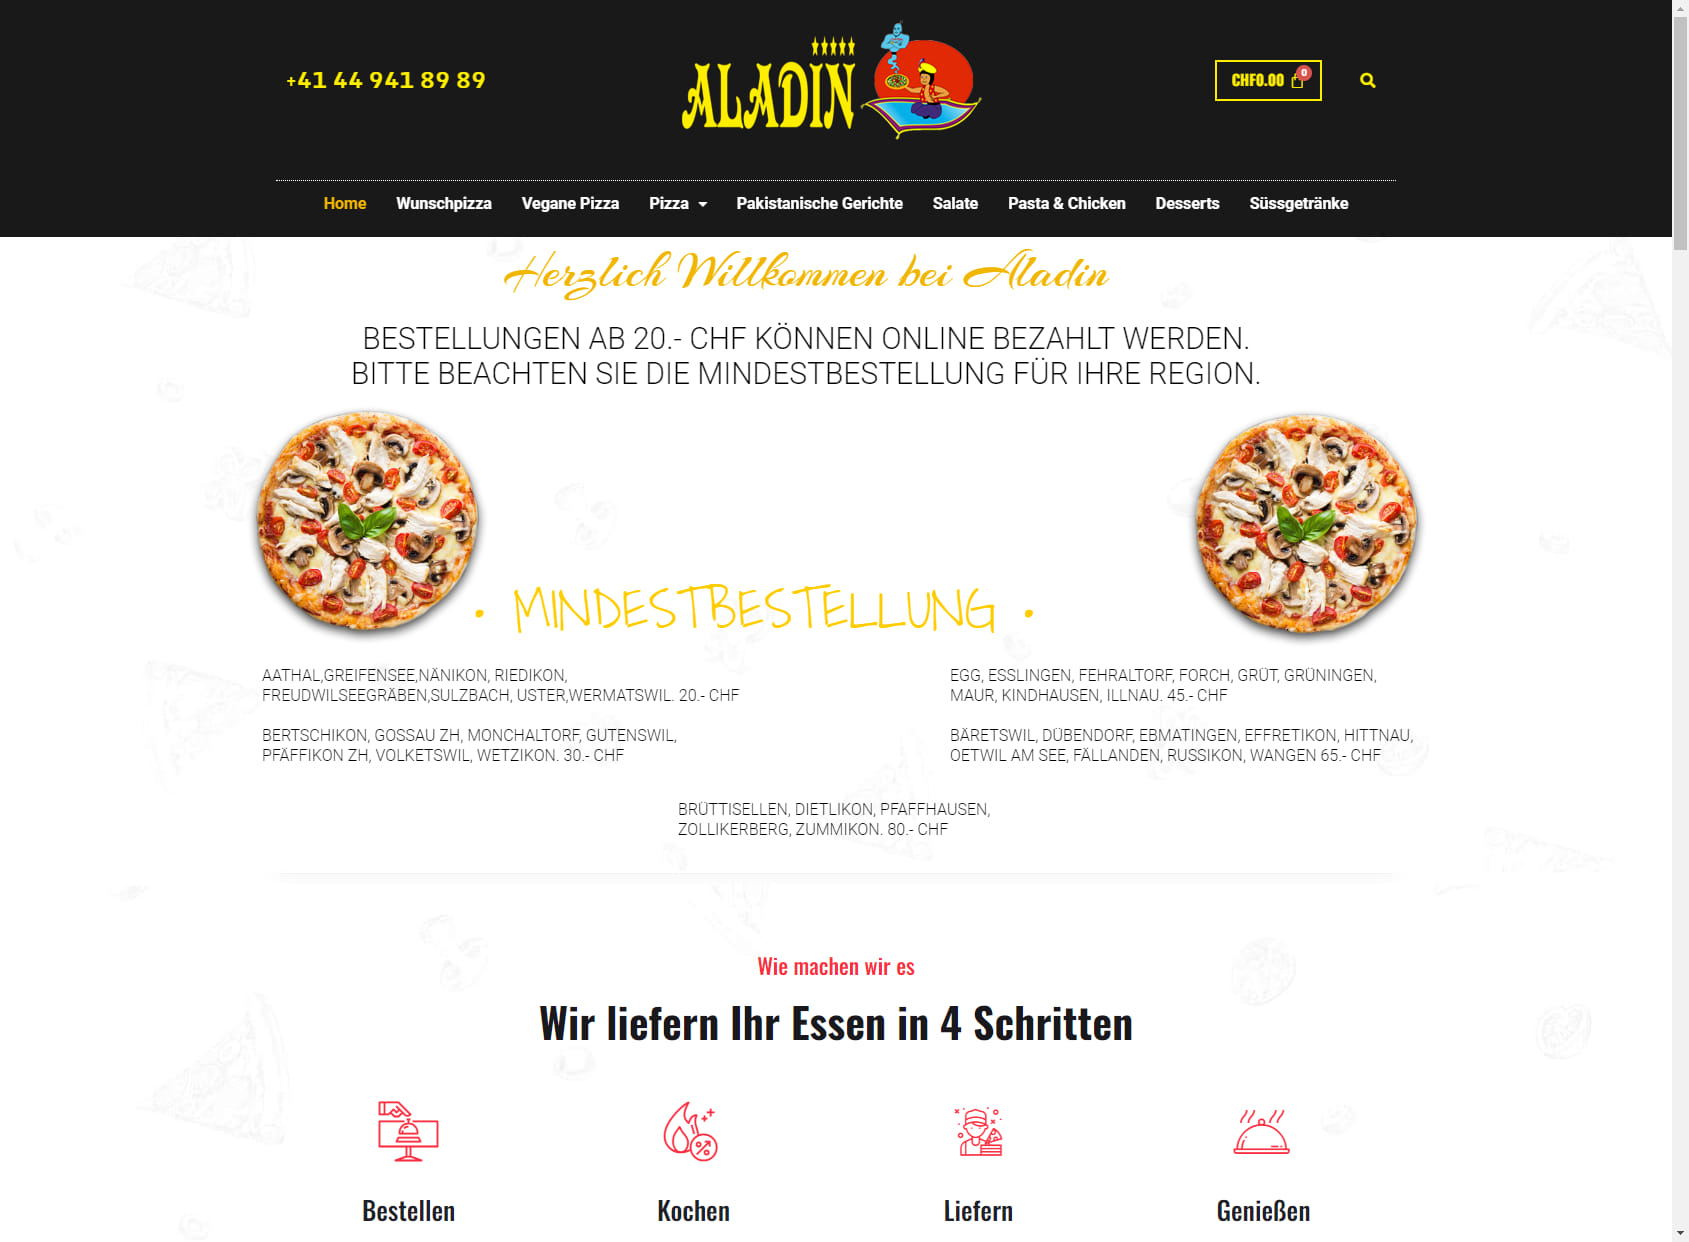 Aladin Pizza Kurier